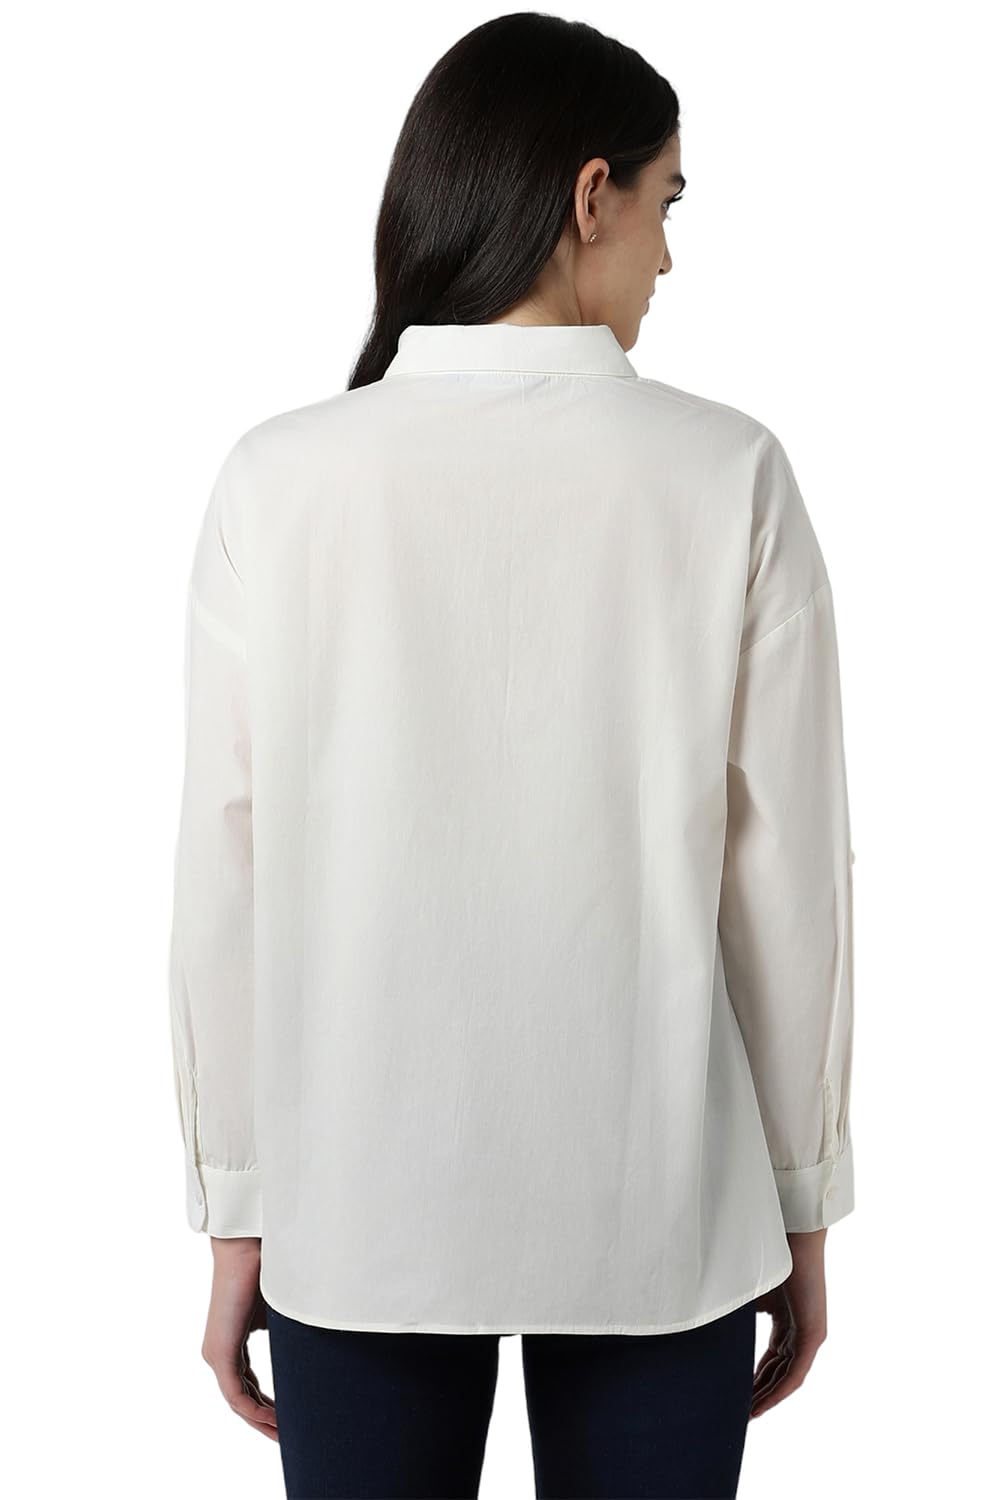 Van Heusen Women's Regular Fit Shirt (VWTSURGHM86851_White